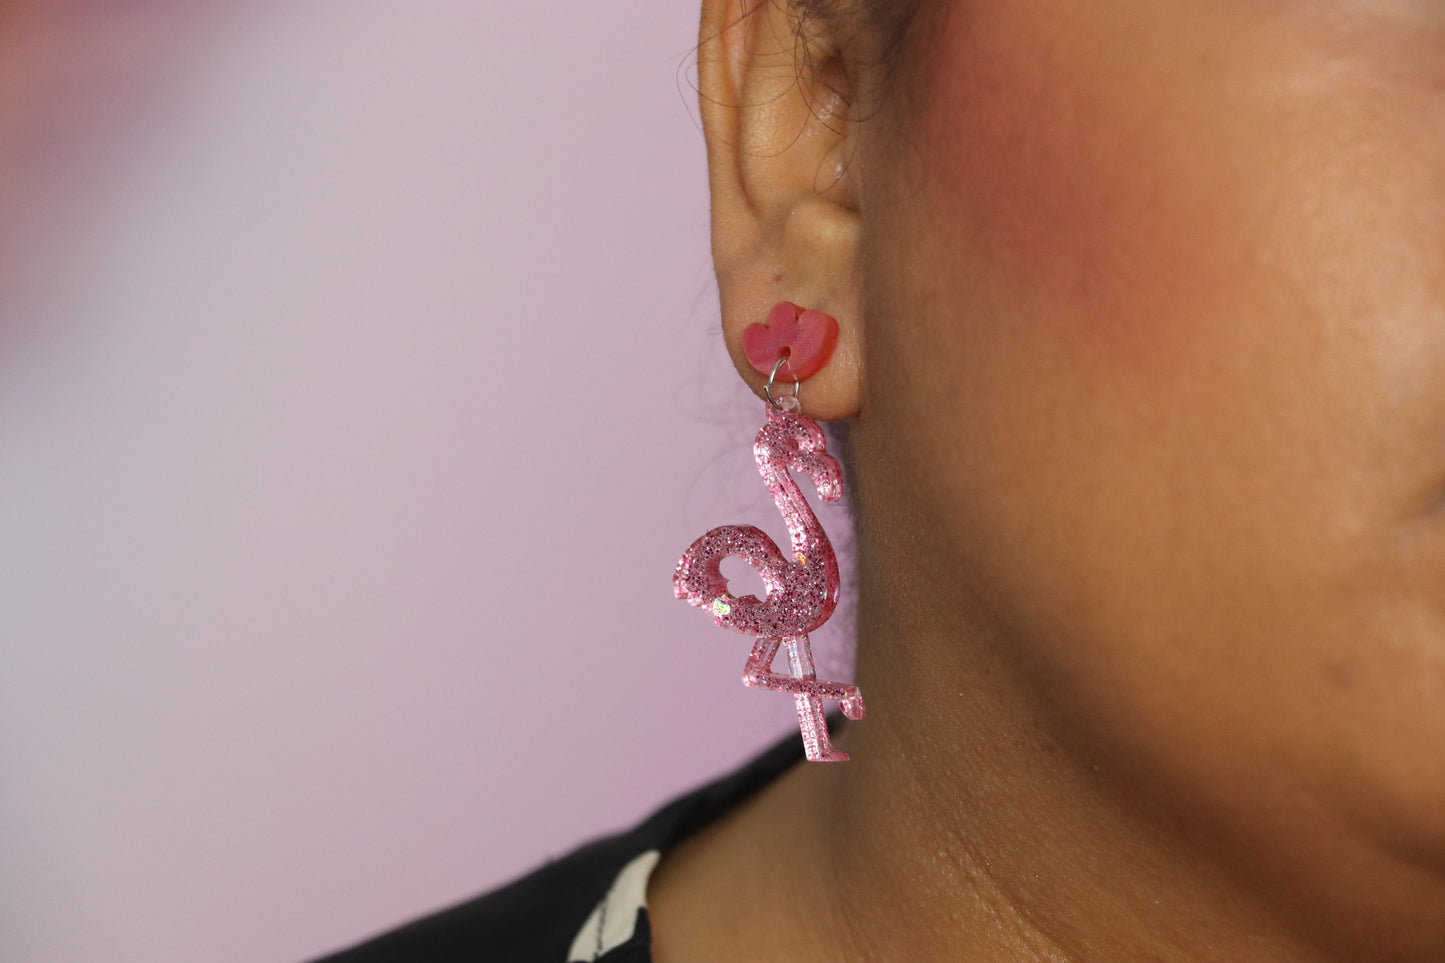 Pink Flamingo earrings